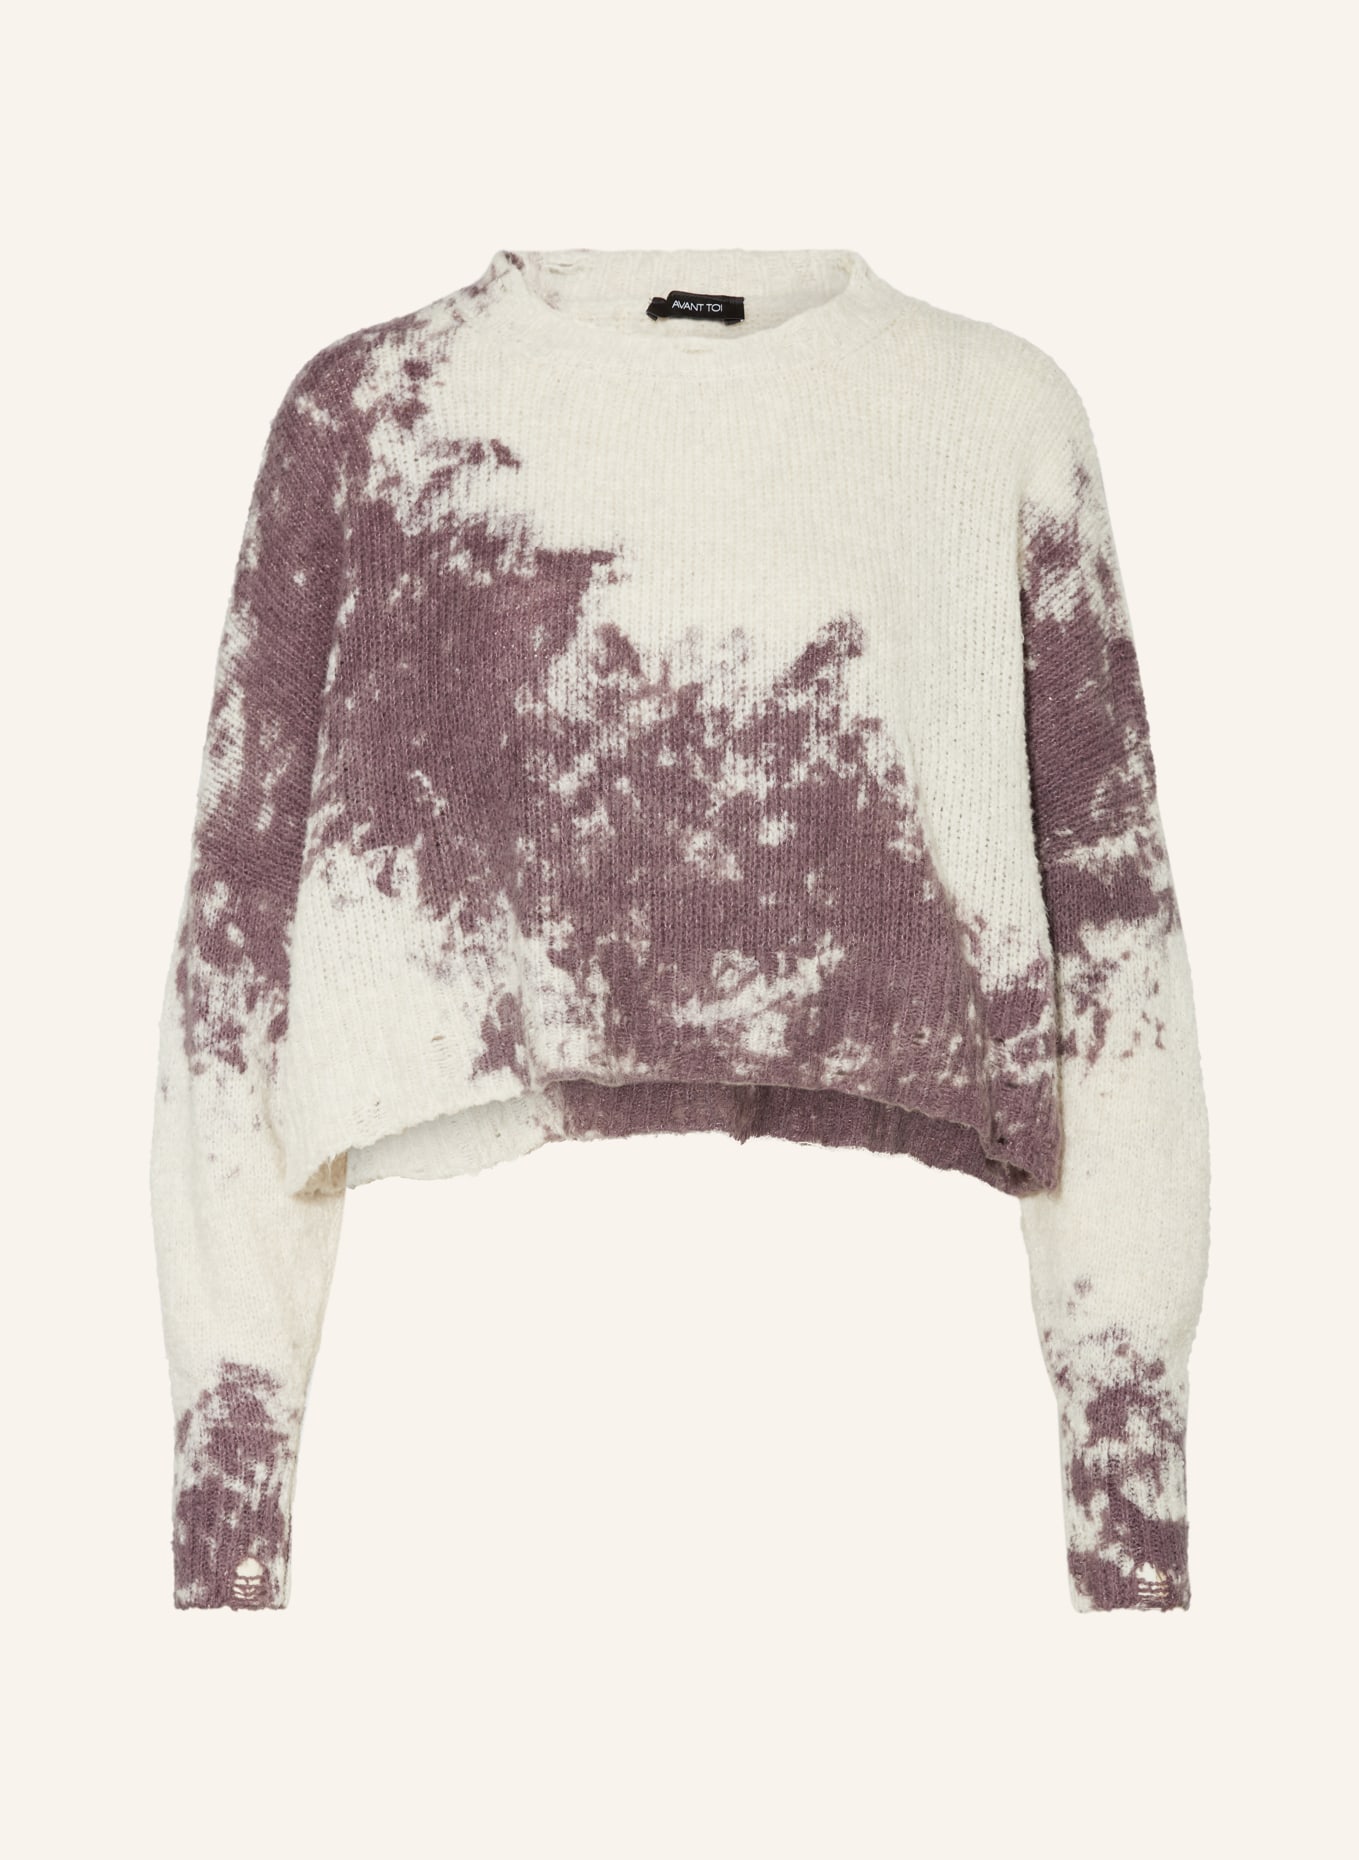 AVANT TOI Cropped-Pullover, Farbe: 18 lavender  grau lavendel (Bild 1)